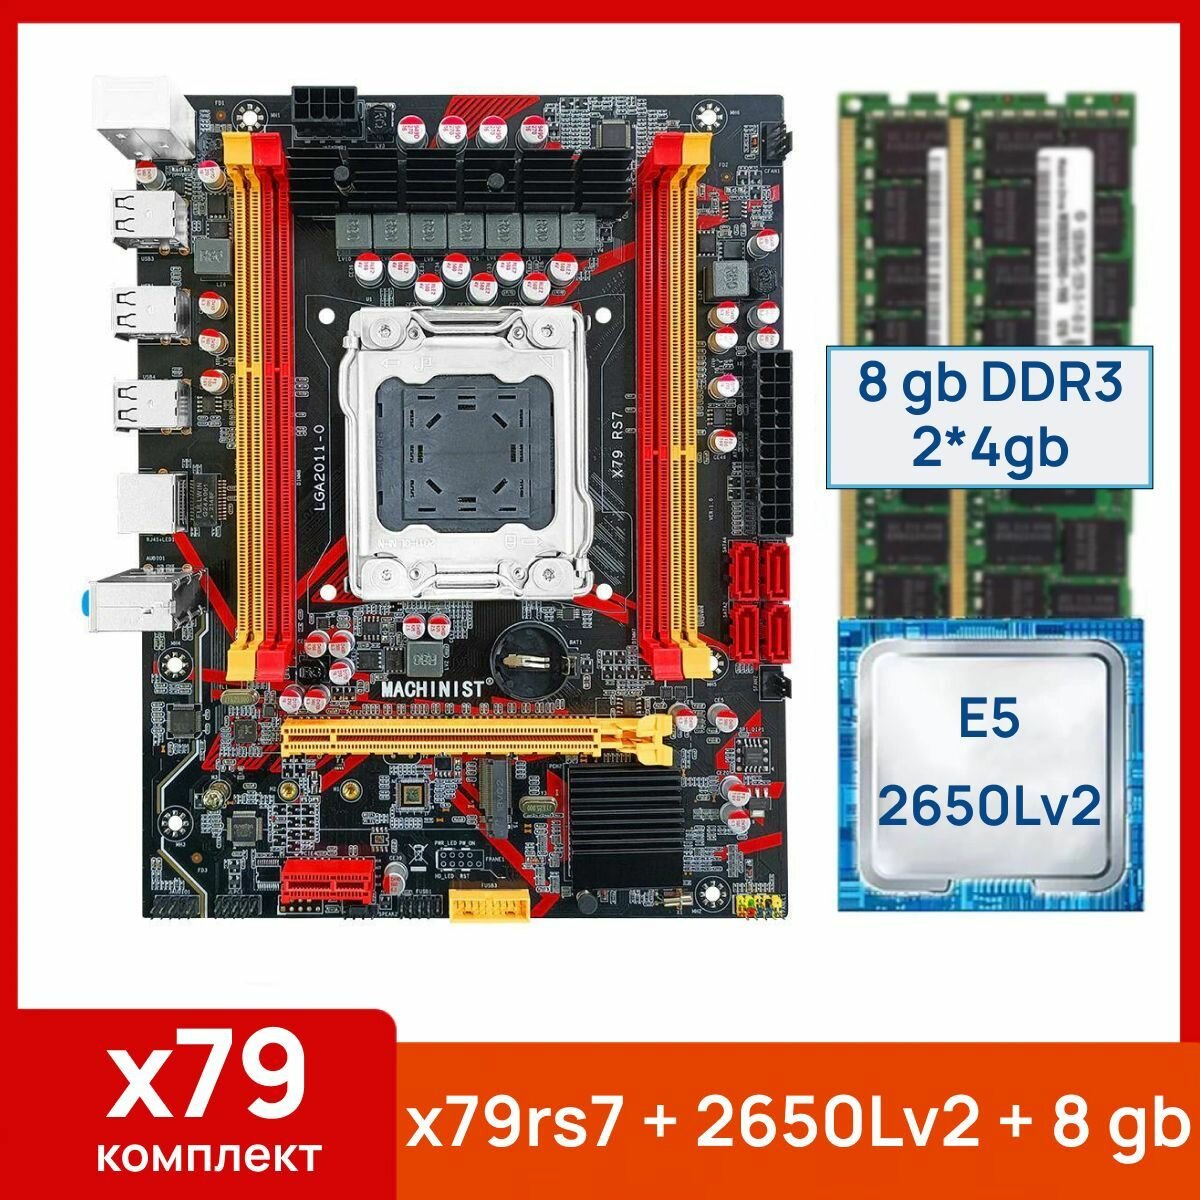 Комплект: Материнская плата Machinist RS-7 + Процессор Xeon E5 2650Lv2 + 8 gb(2x4gb) DDR3 серверная